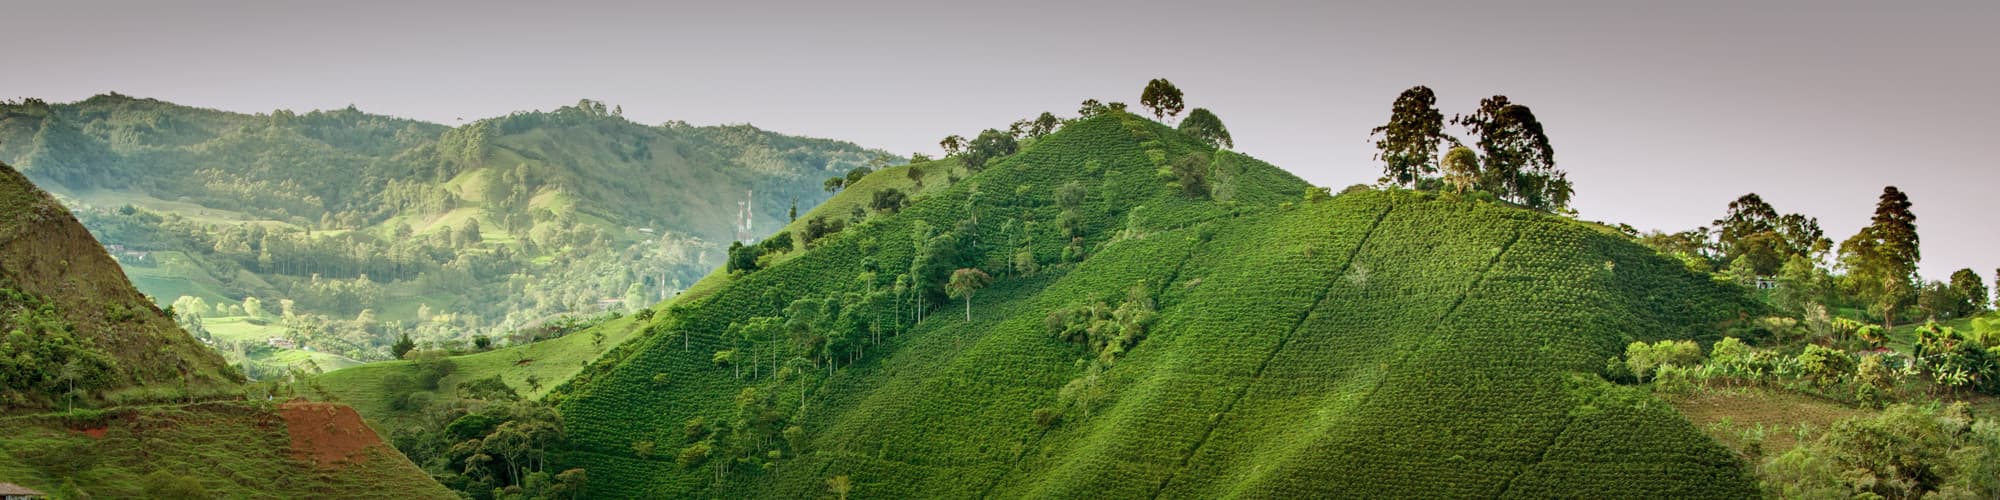 Randonnée Colombie © Martin Nabert / Istock